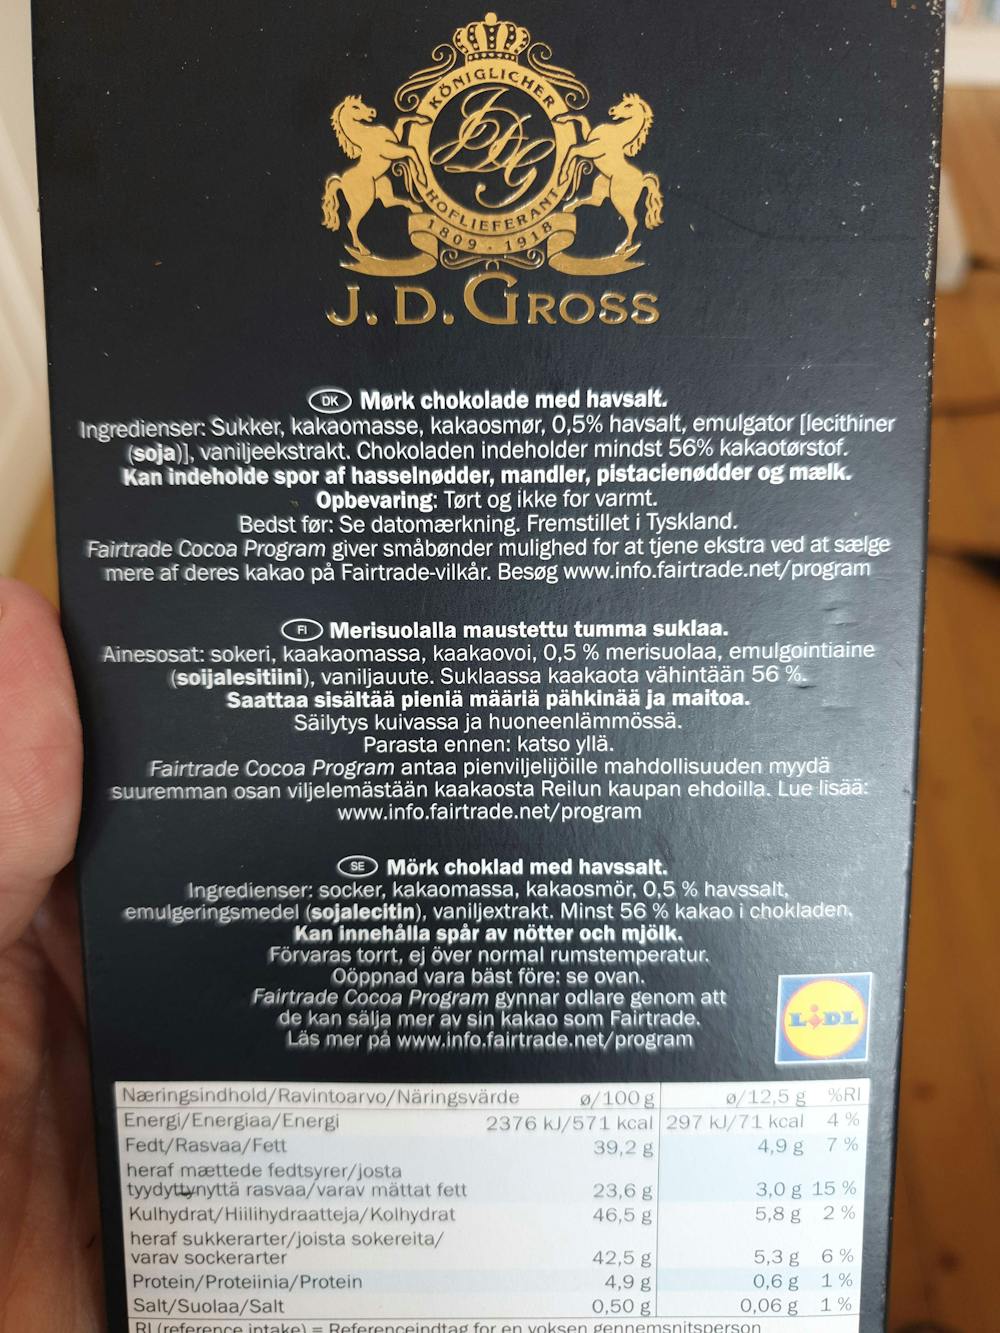 Ingredienslisten til Sea salt 56% cacao, J. D. Gross